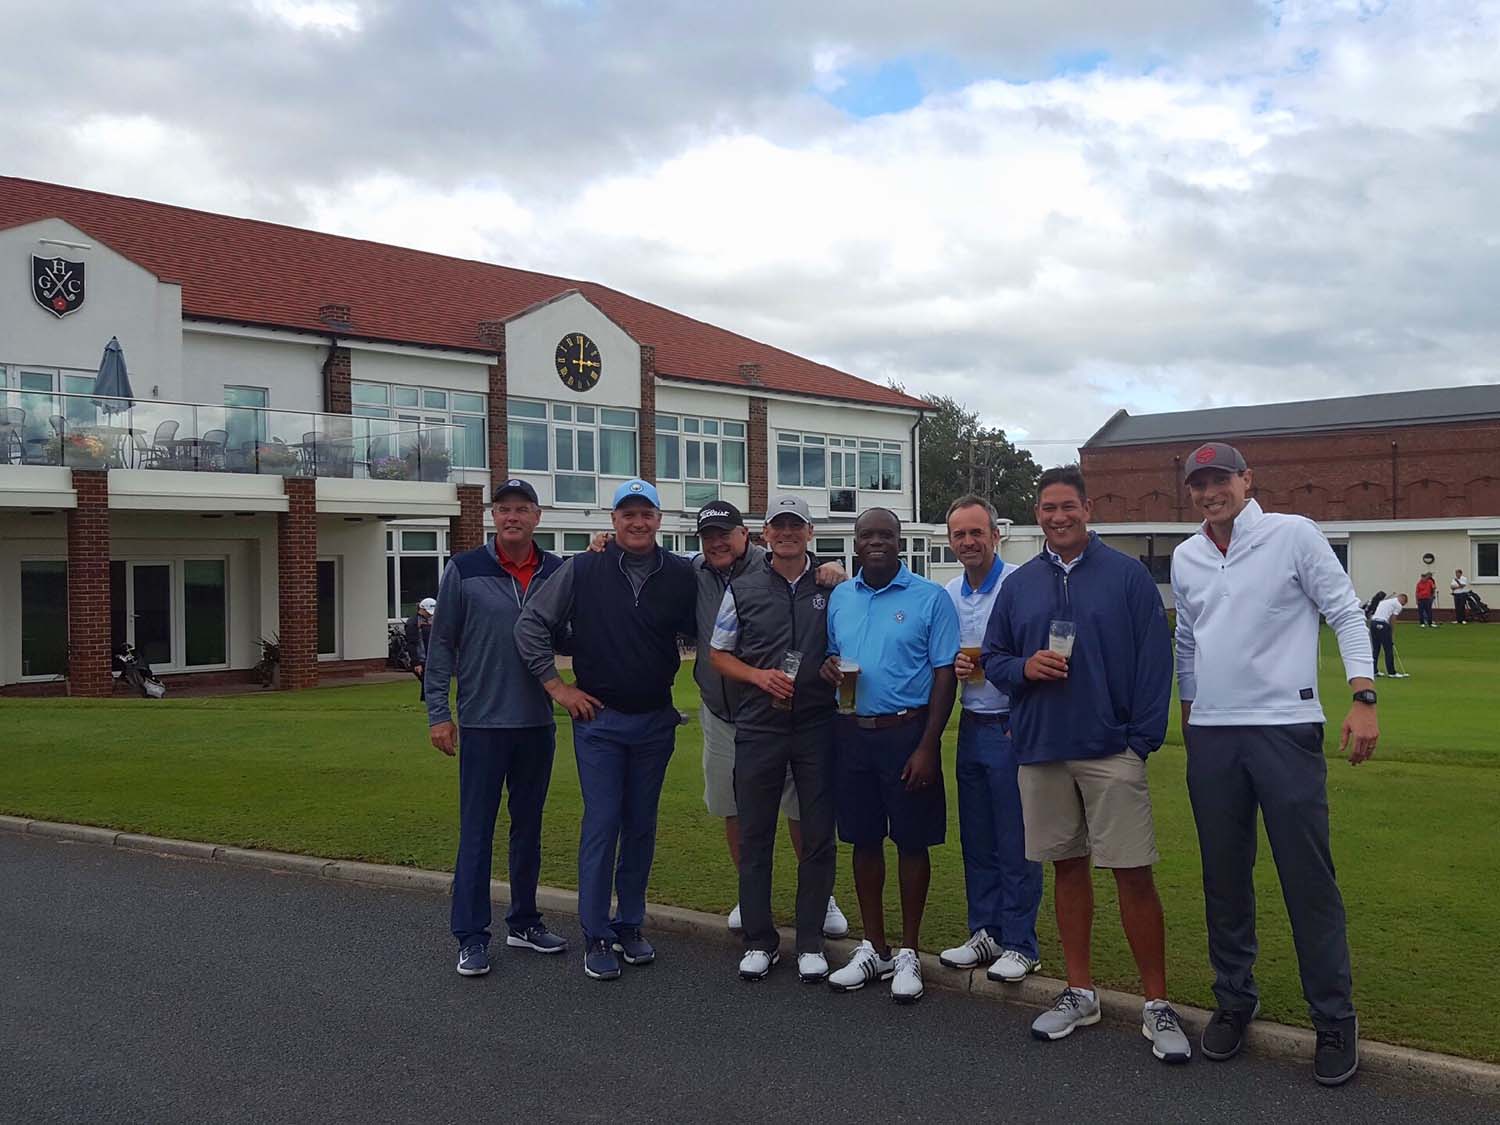 Haversham & Baker England golf trip reviews